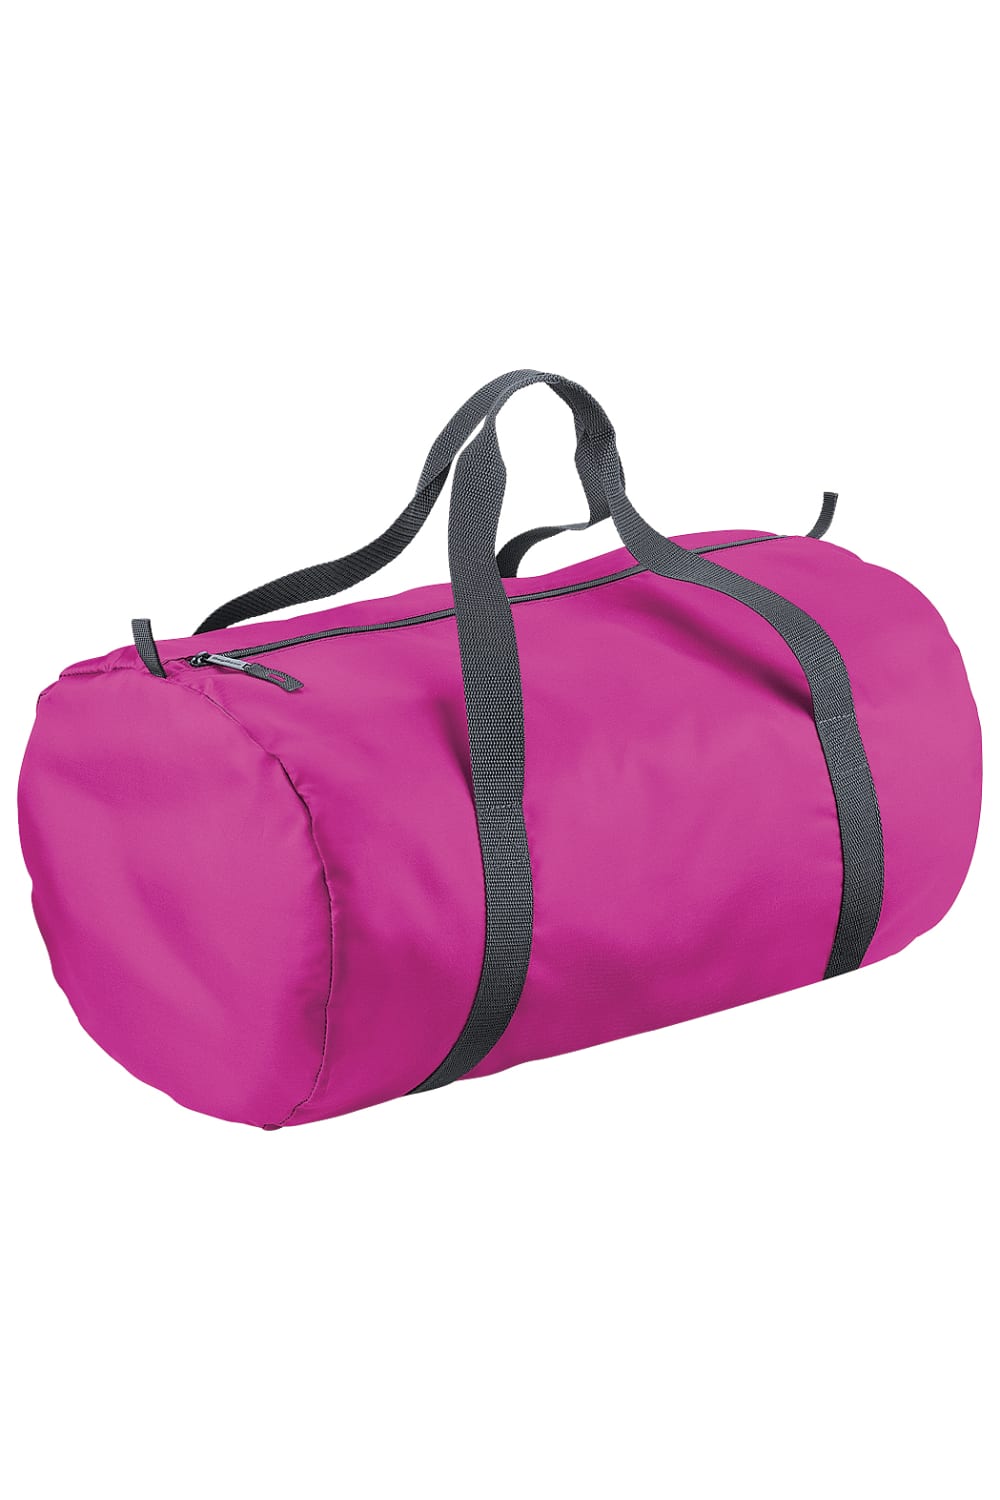 Packaway Barrel Bag/Duffel Water Resistant Travel Bag, 8 Gallons - Fuchsia